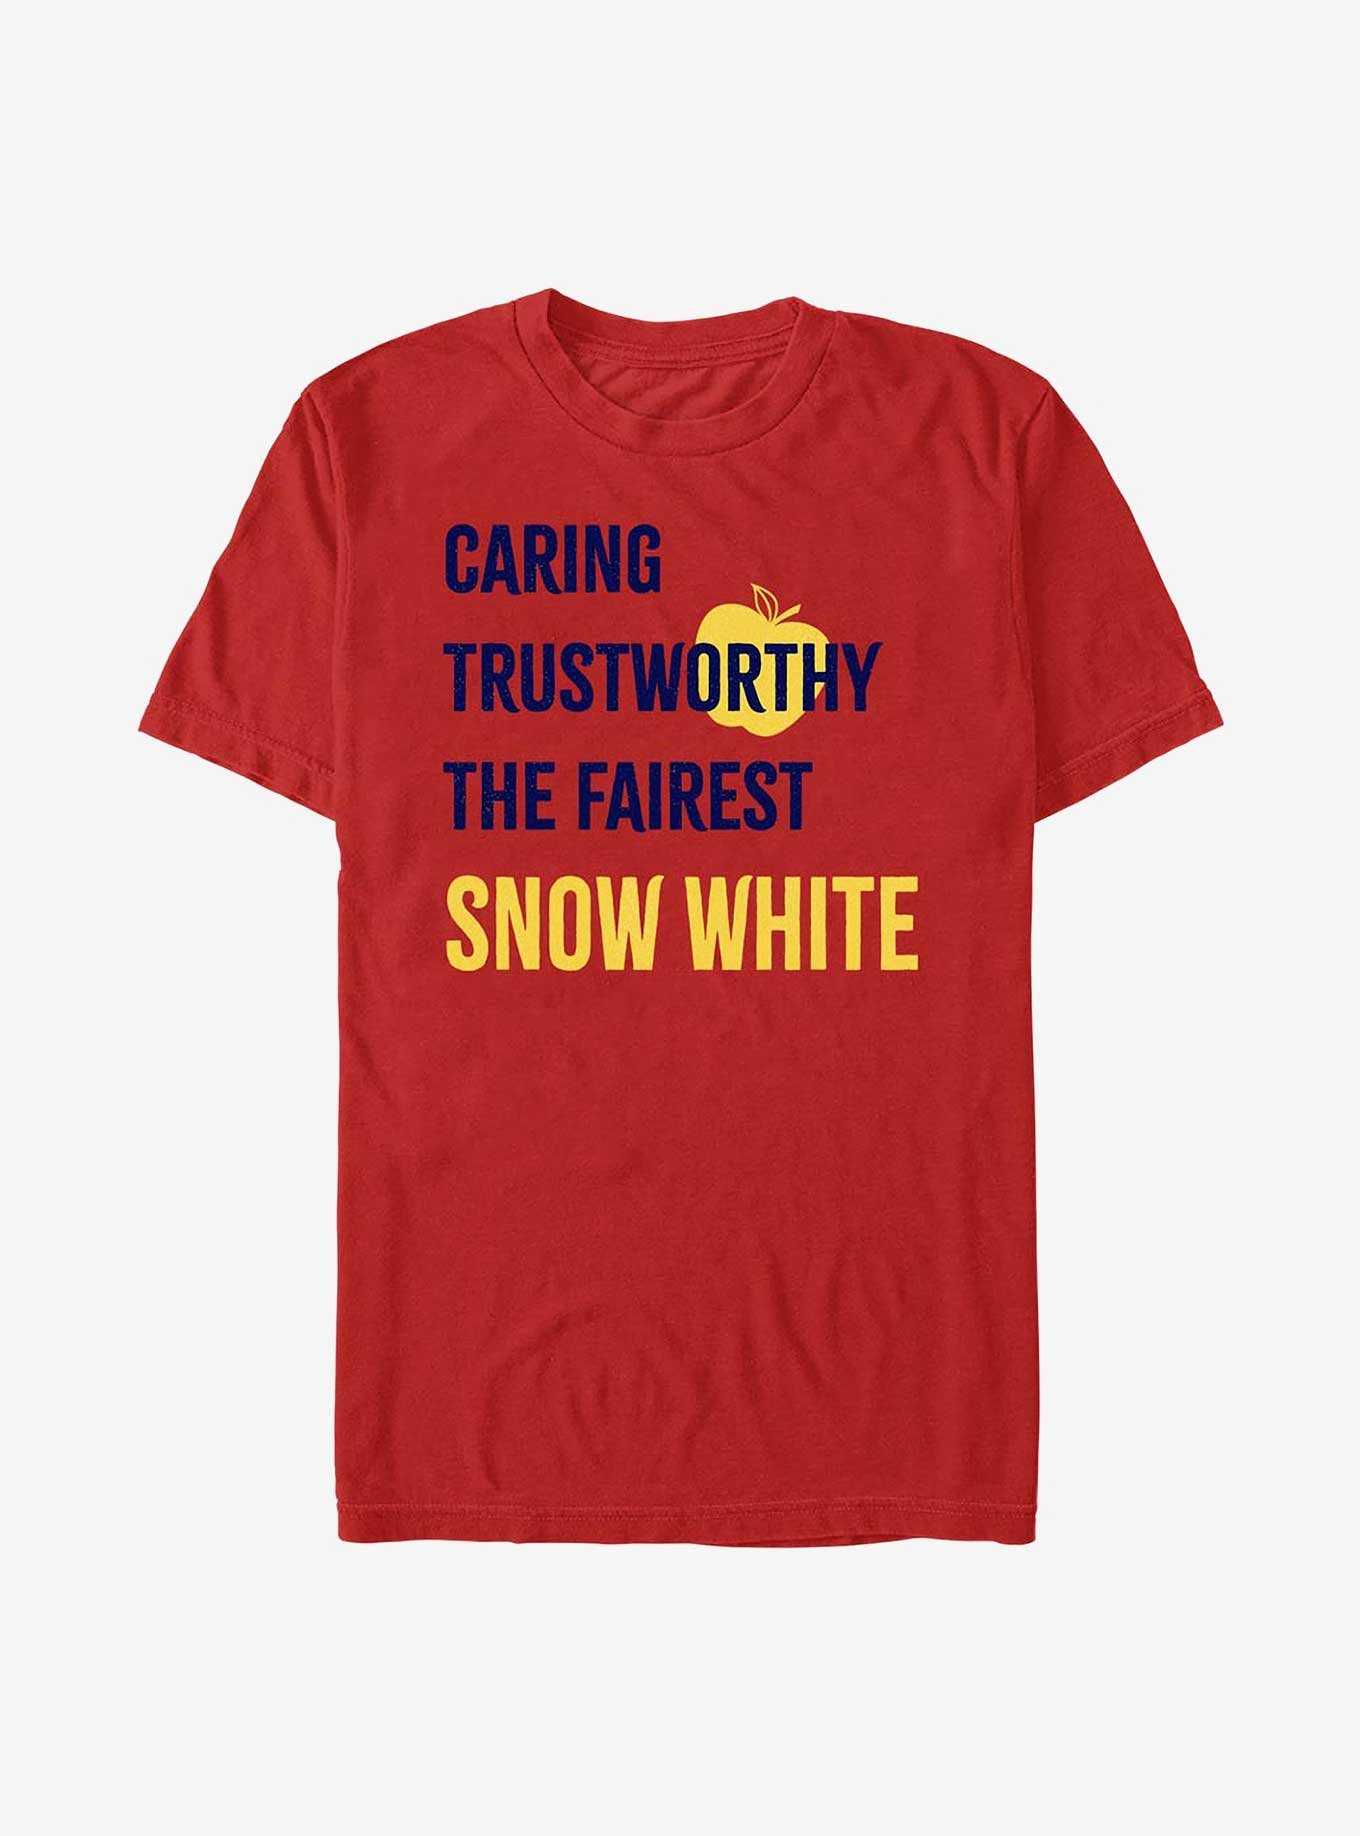 Disney Snow White List T-Shirt, , hi-res